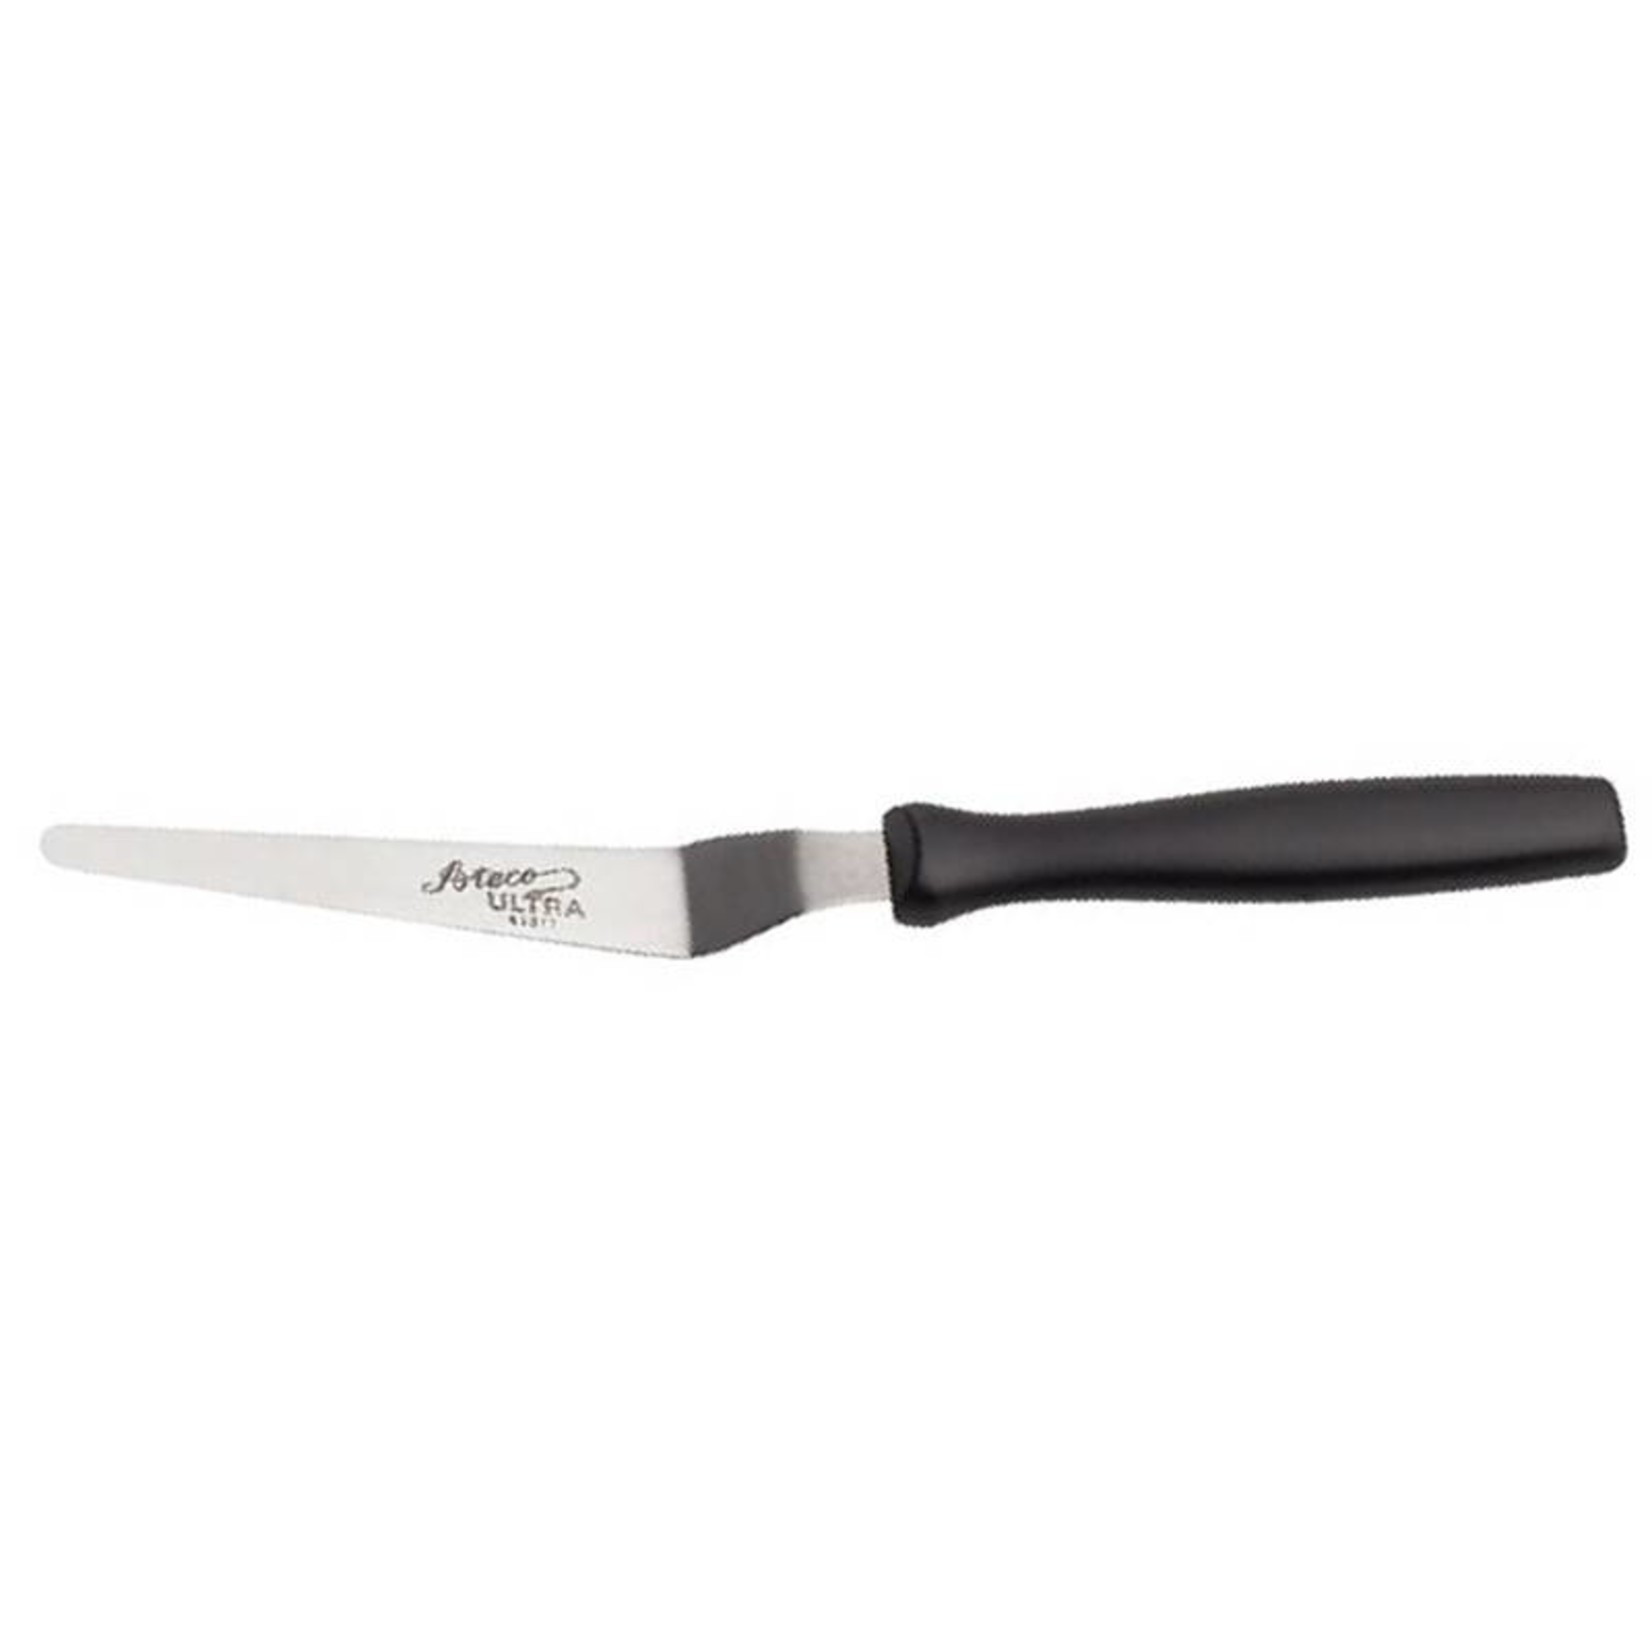 Wüsthof Silverpoint offset spatula 10 cm, 9195191910